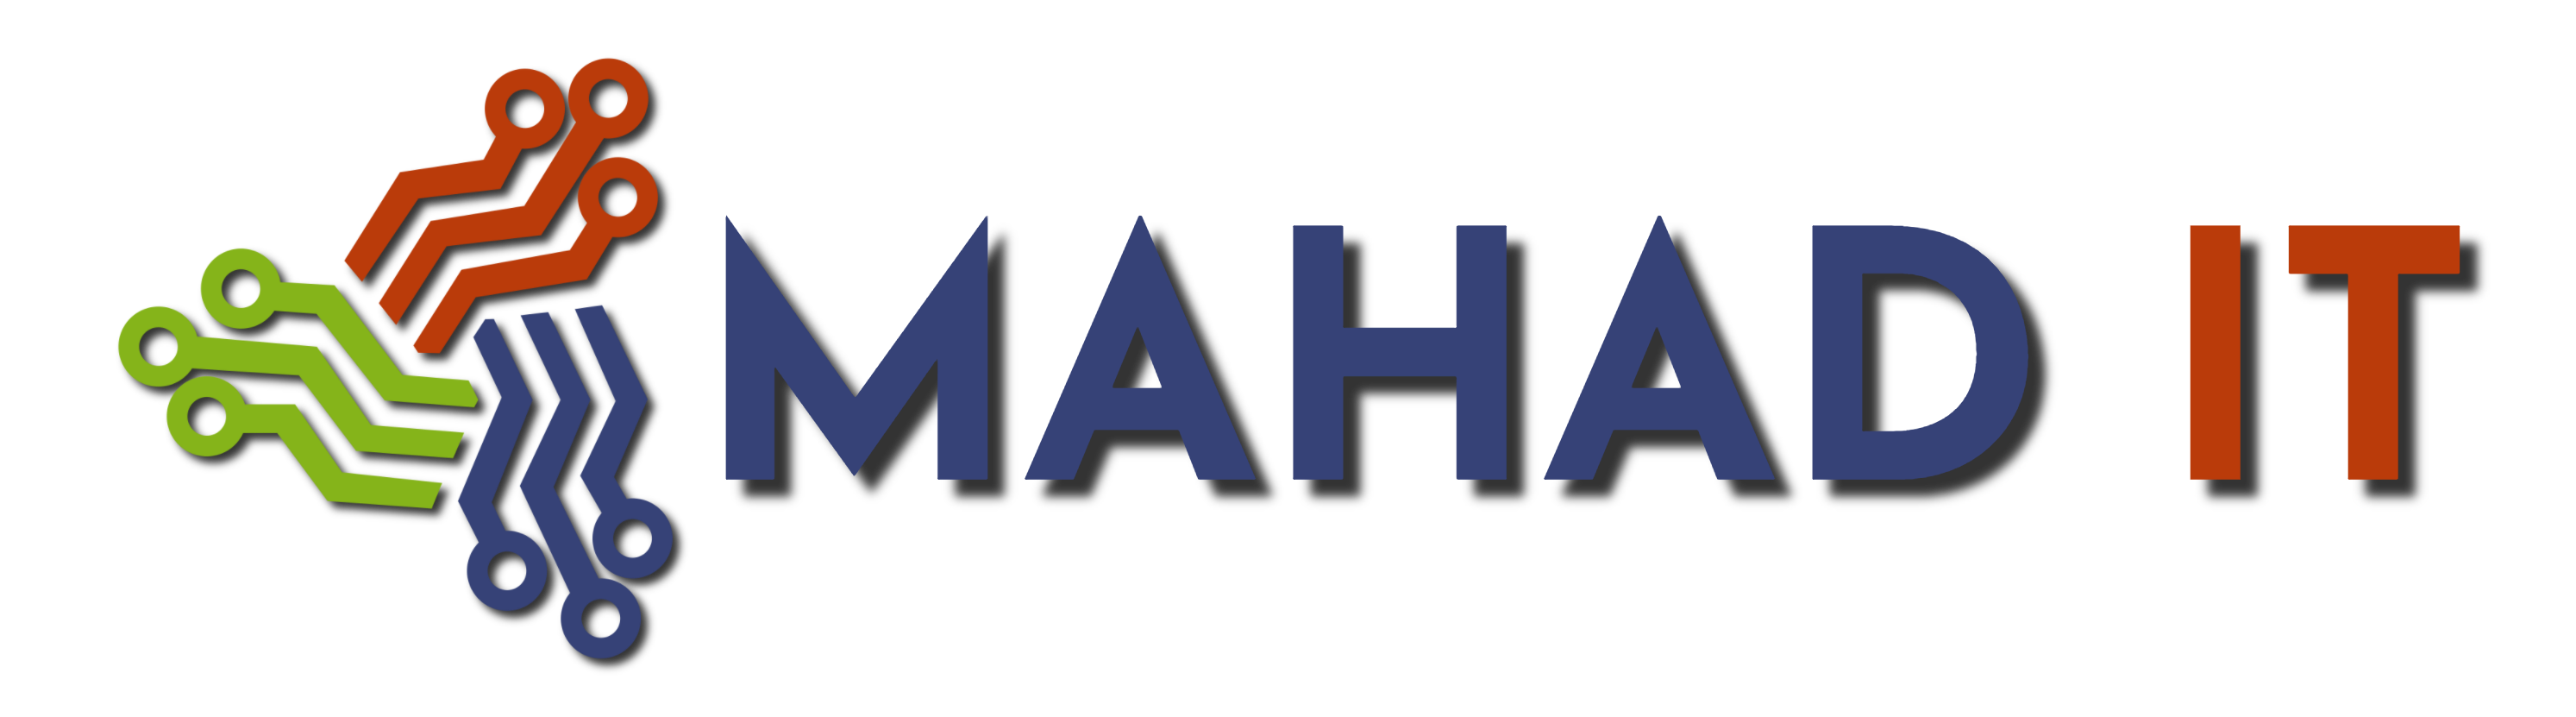 Mahadit logo